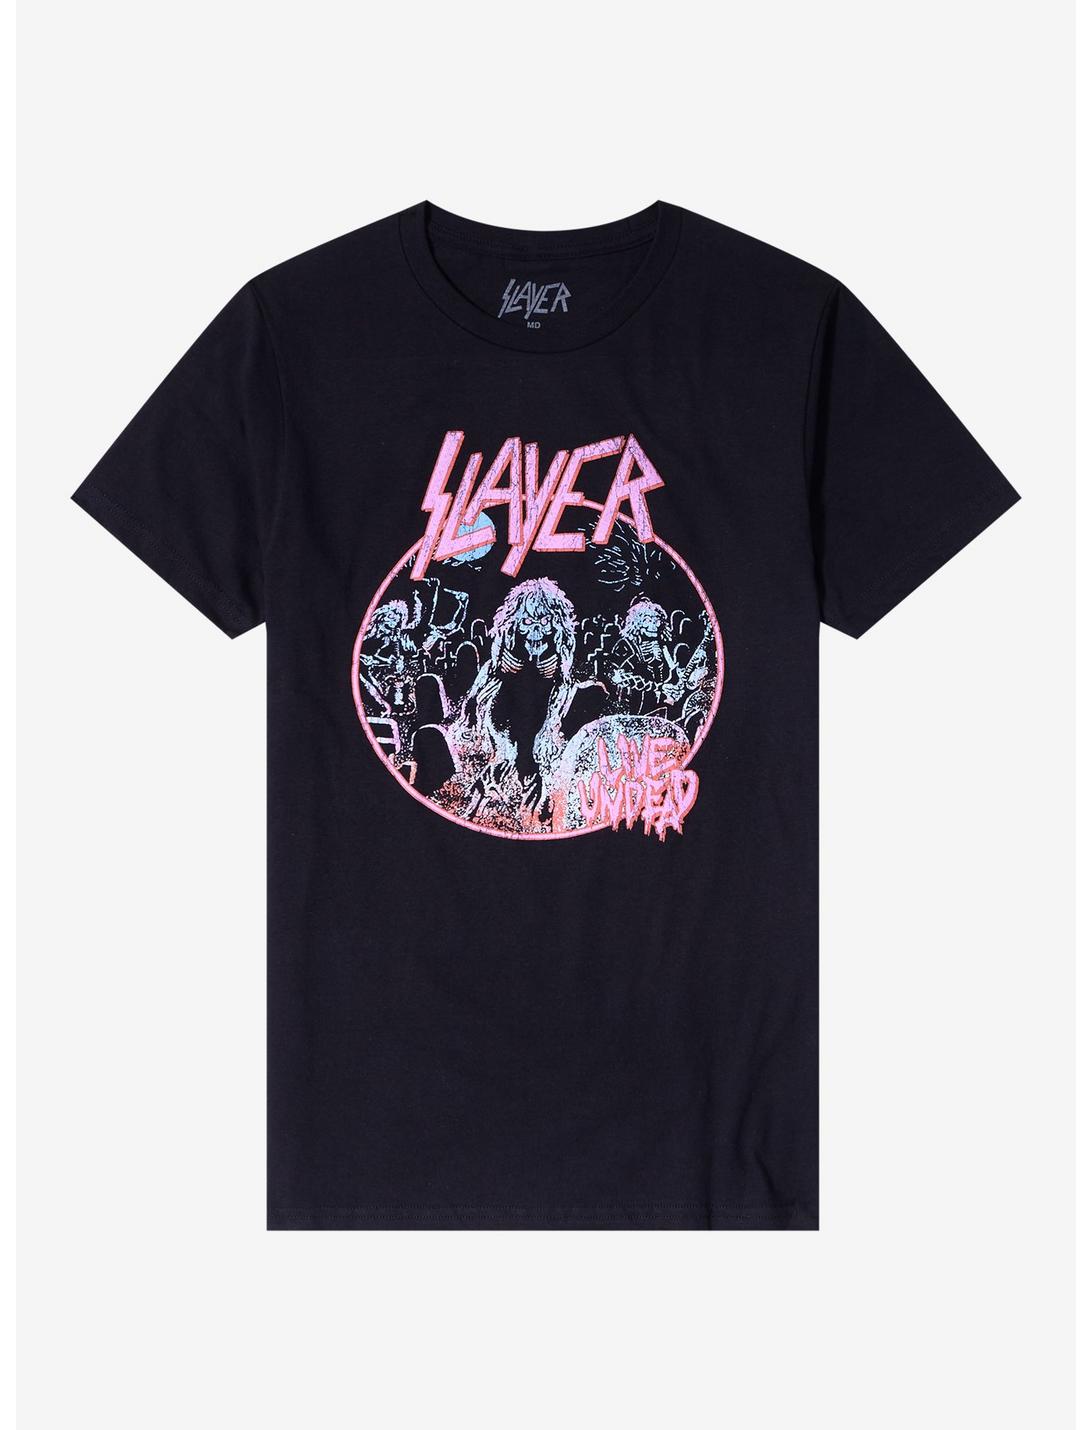 Slayer Live Undead Pastel Boyfriend Fit Girls T-Shirt, BLACK, hi-res